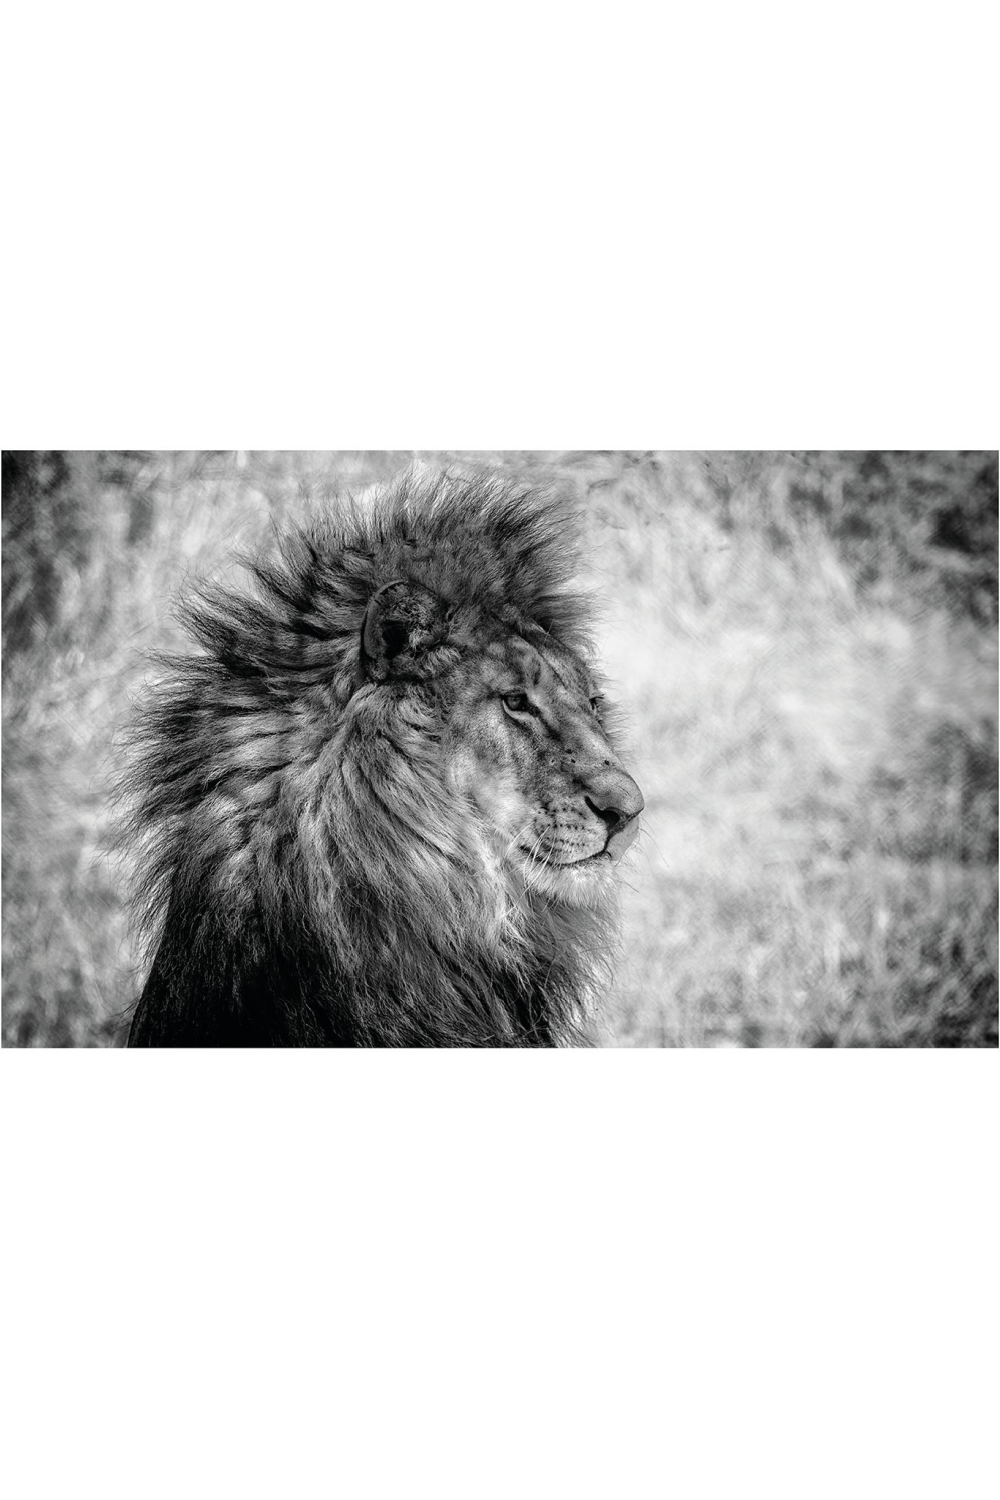 Wild Animal Photographic Artwork | Andrew Martin Lion King | Oroa.com.